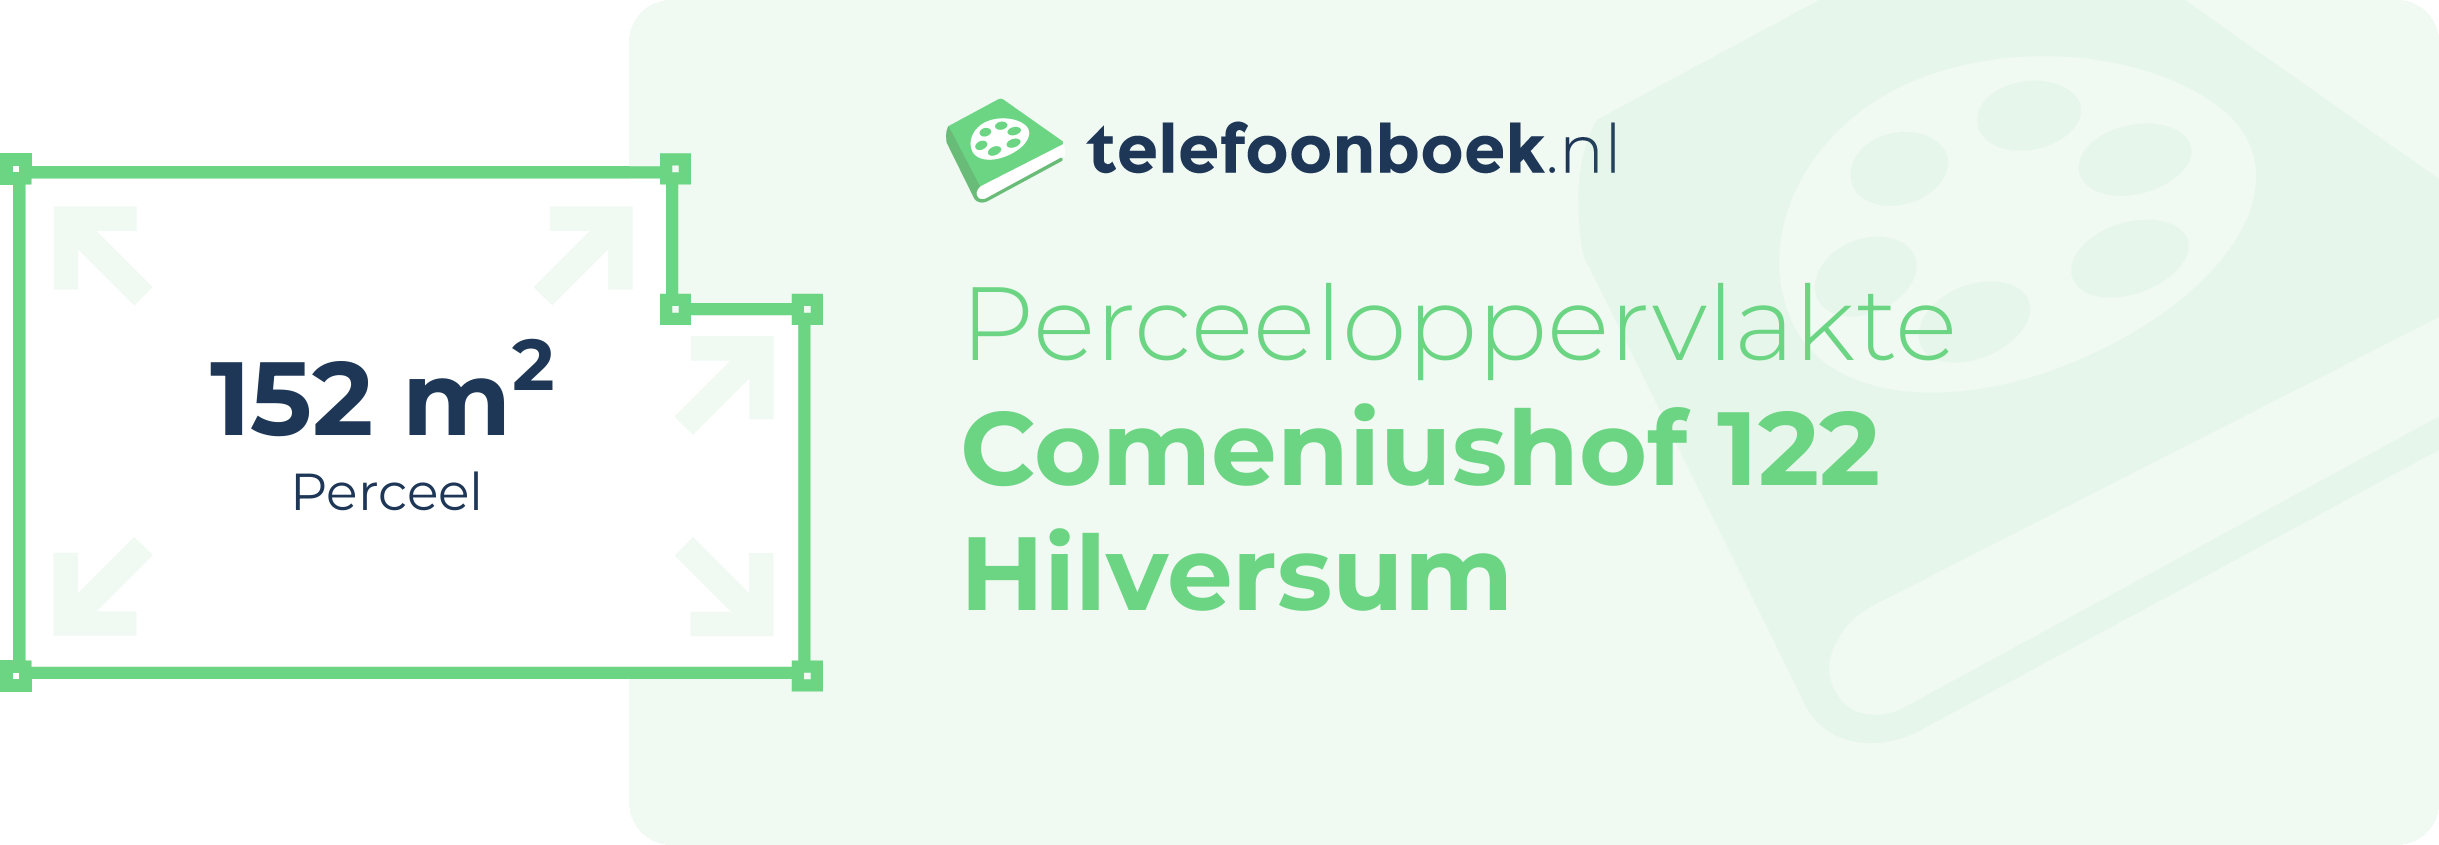 Perceeloppervlakte Comeniushof 122 Hilversum